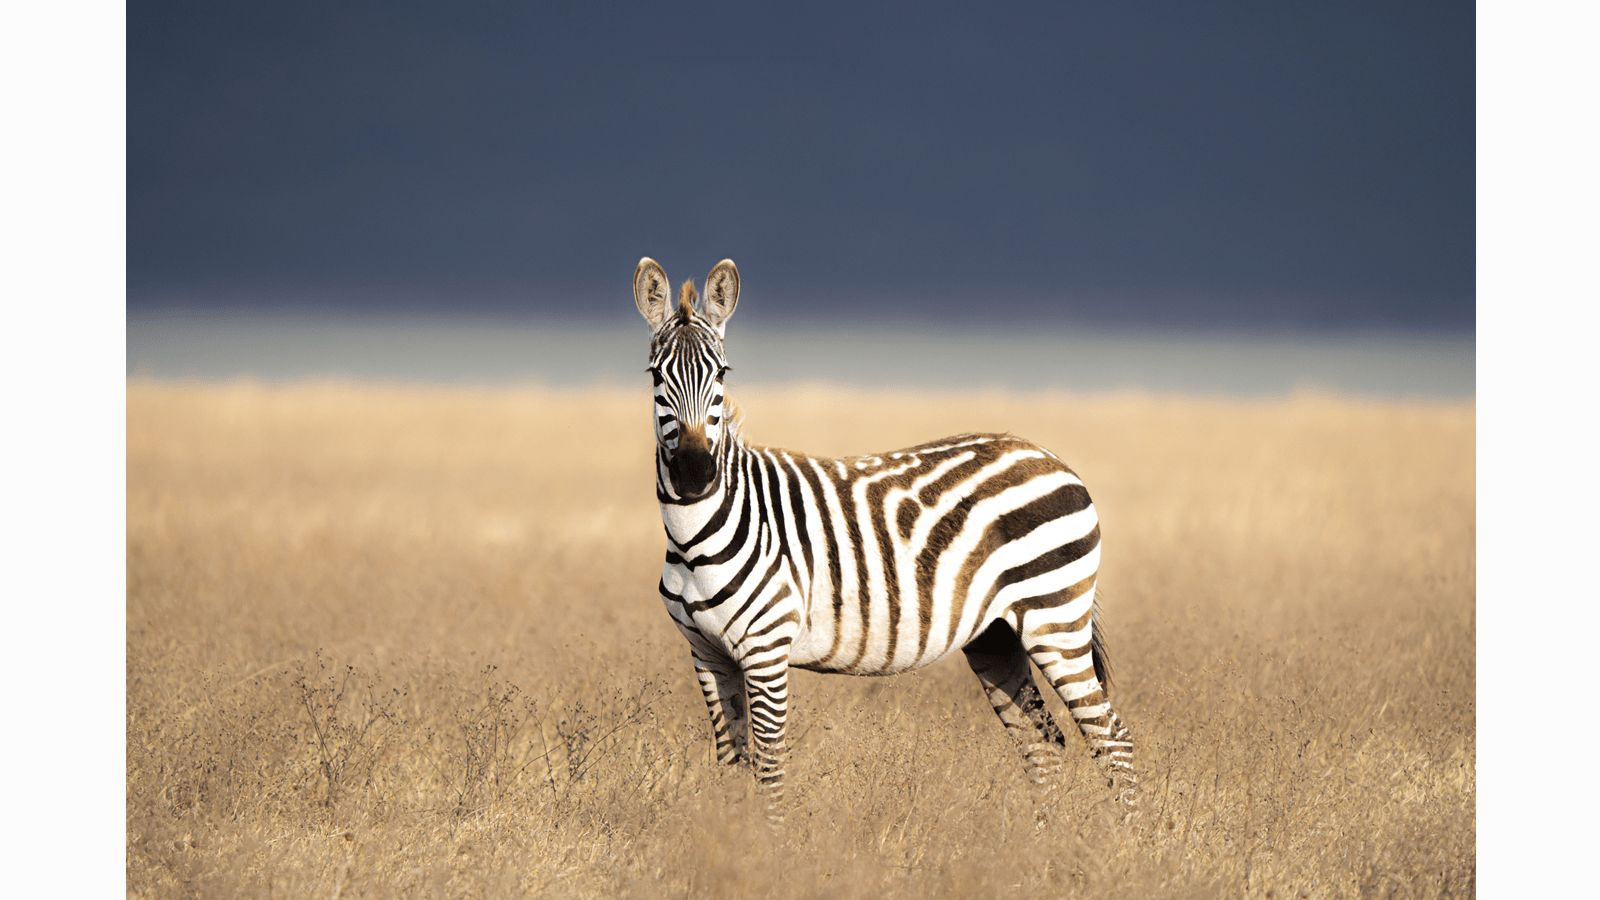 A zebra stands alone in dry grass against a slate blue sky